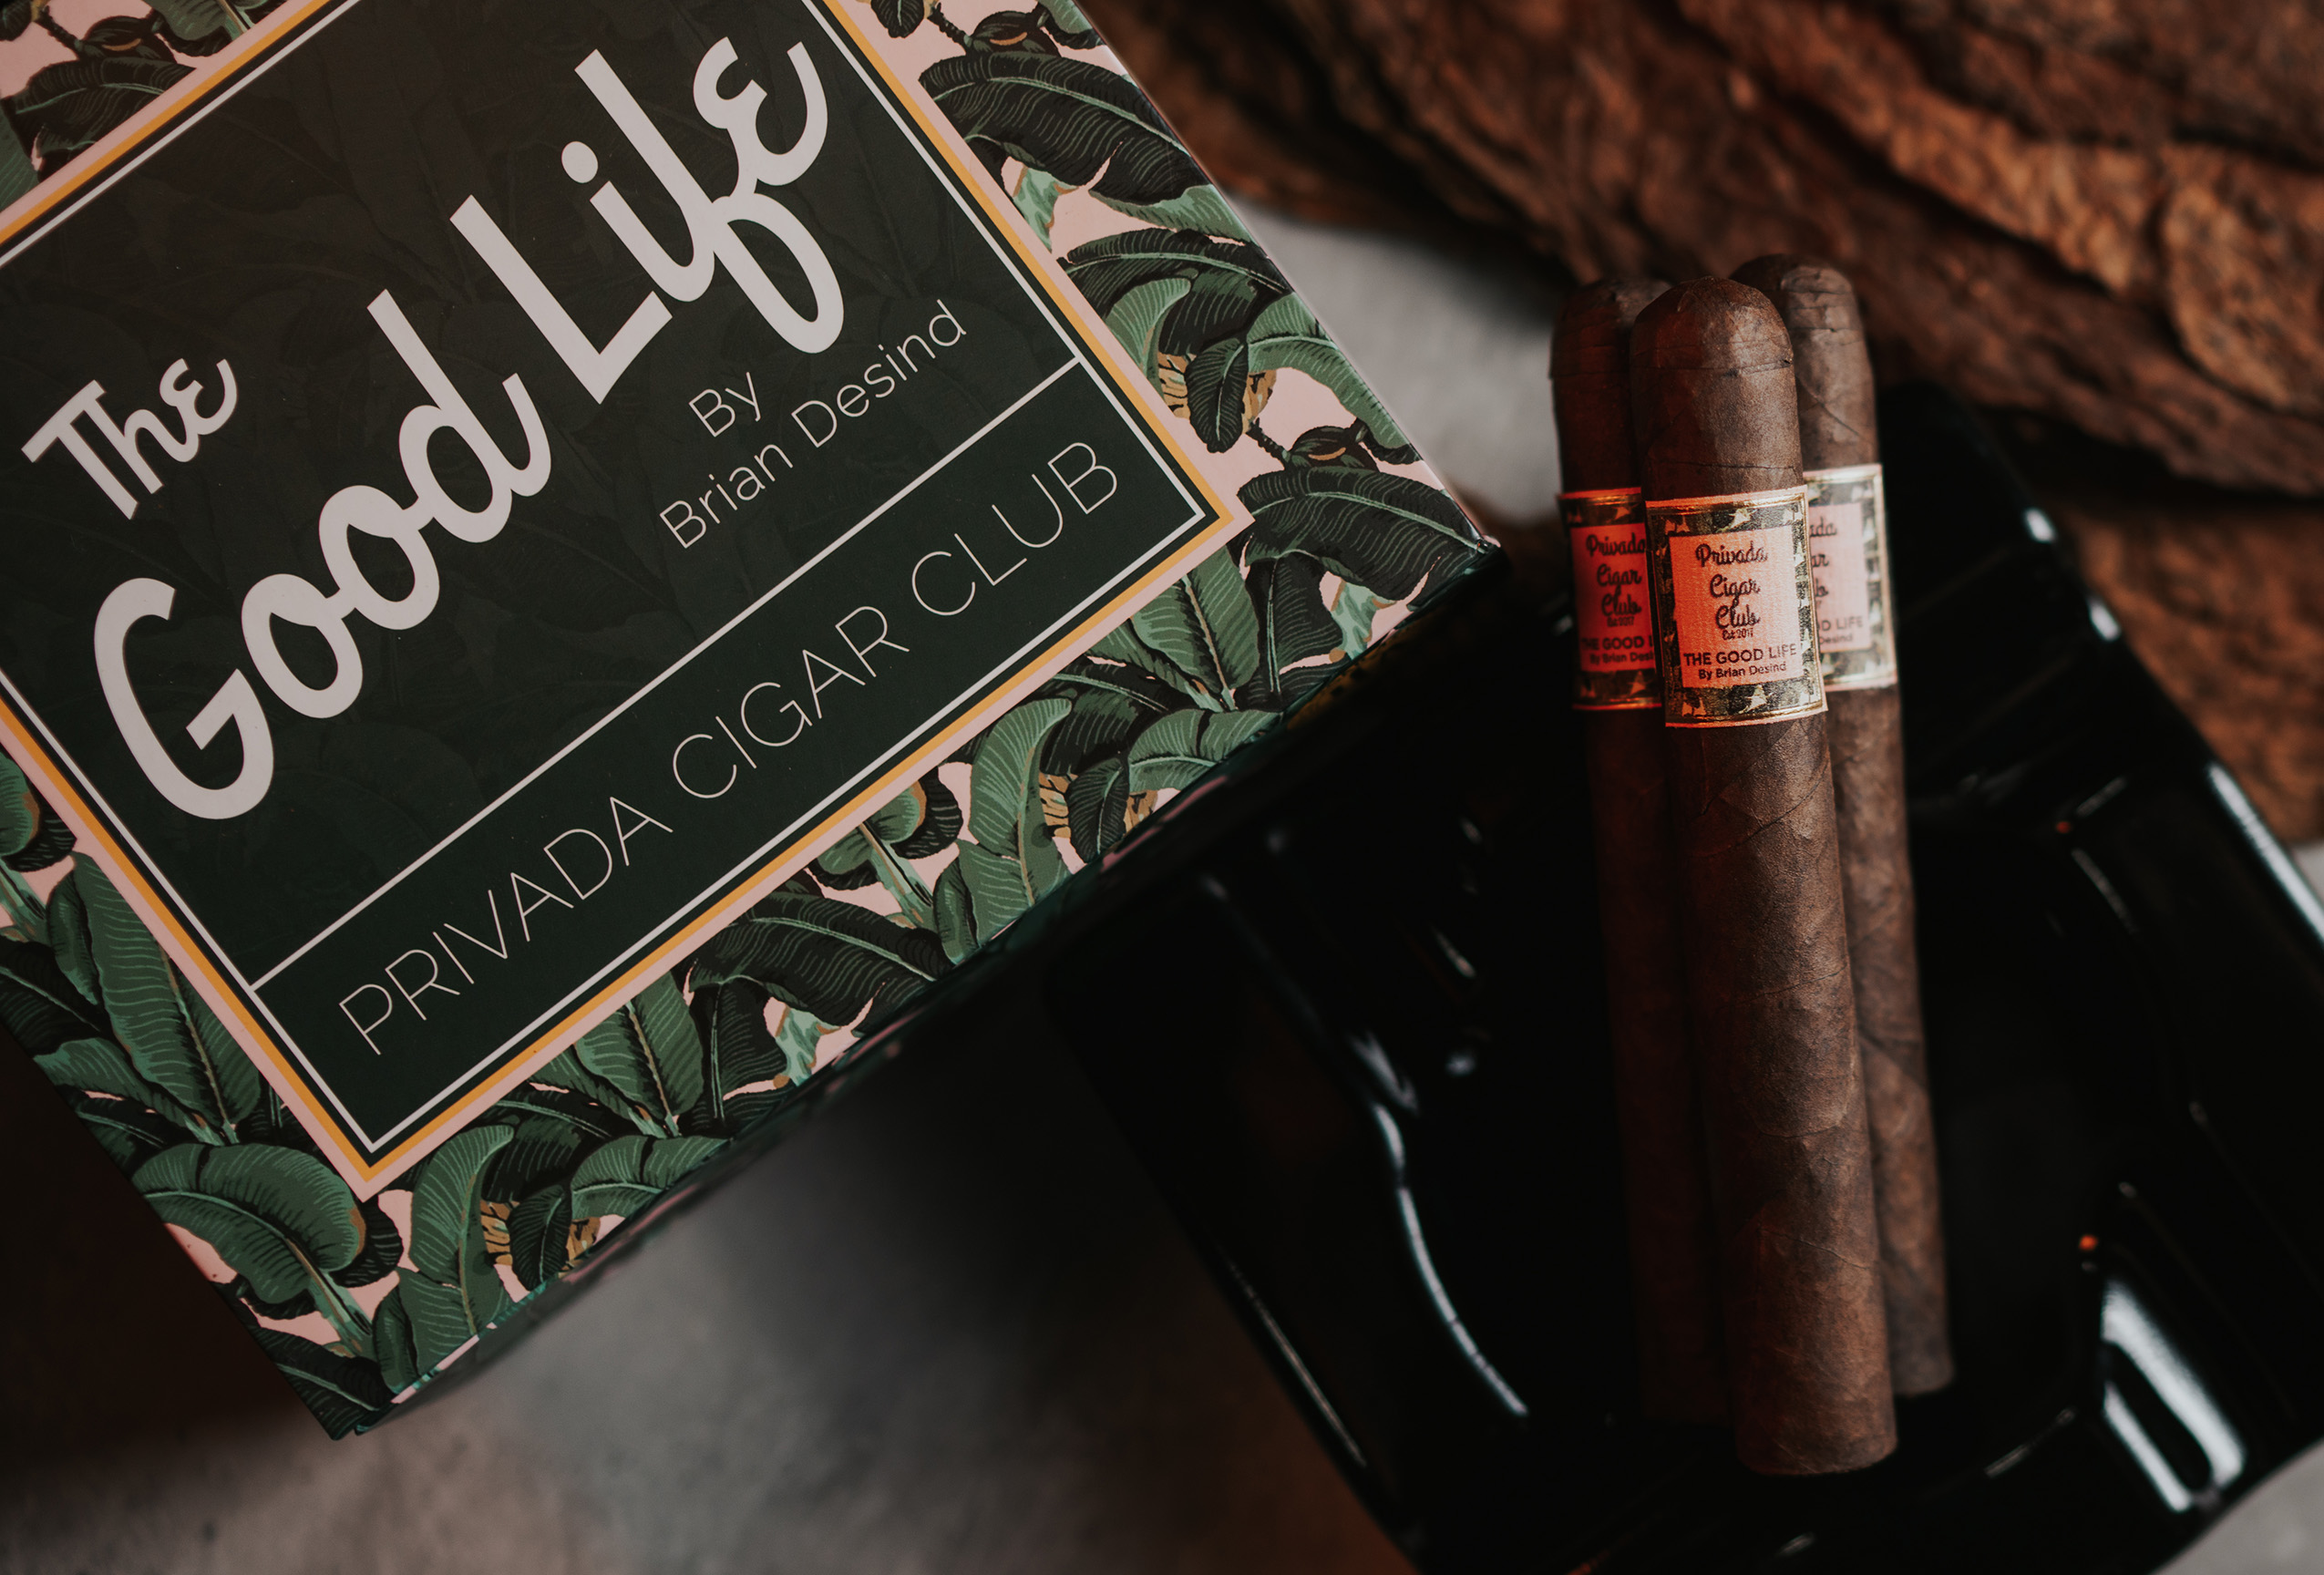 Los Gatos Cigar Club  Come Enjoy A True Cigar Lounge Experience